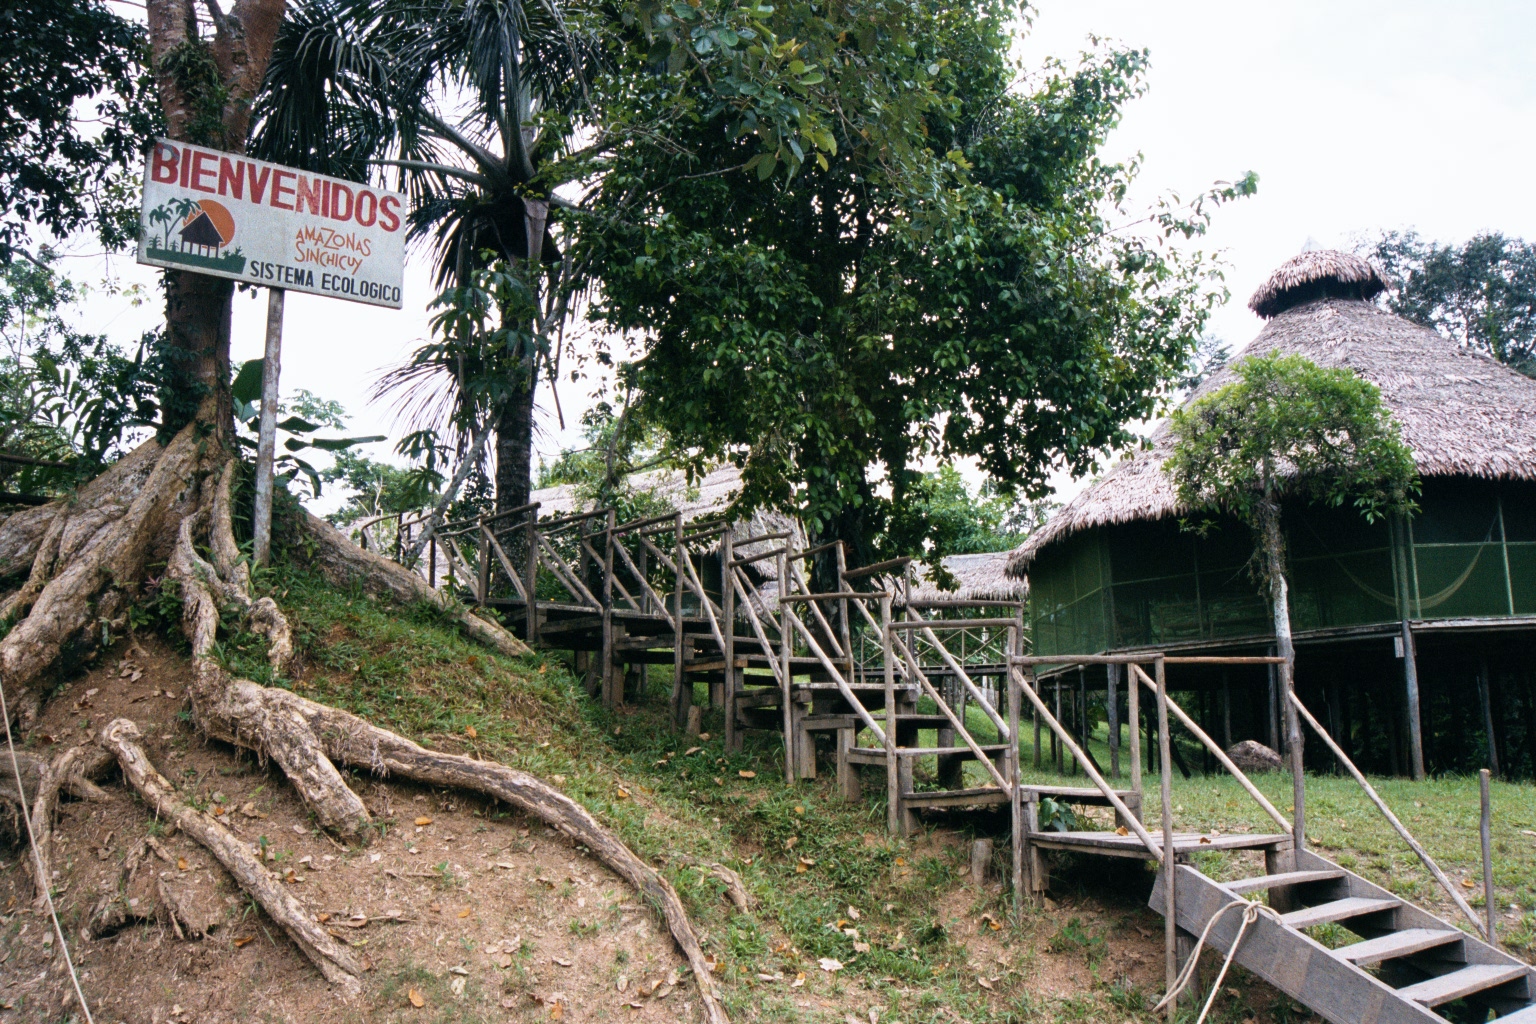 sinchucuy lodge in amazon near Iquitos. Peru - Feb 2002